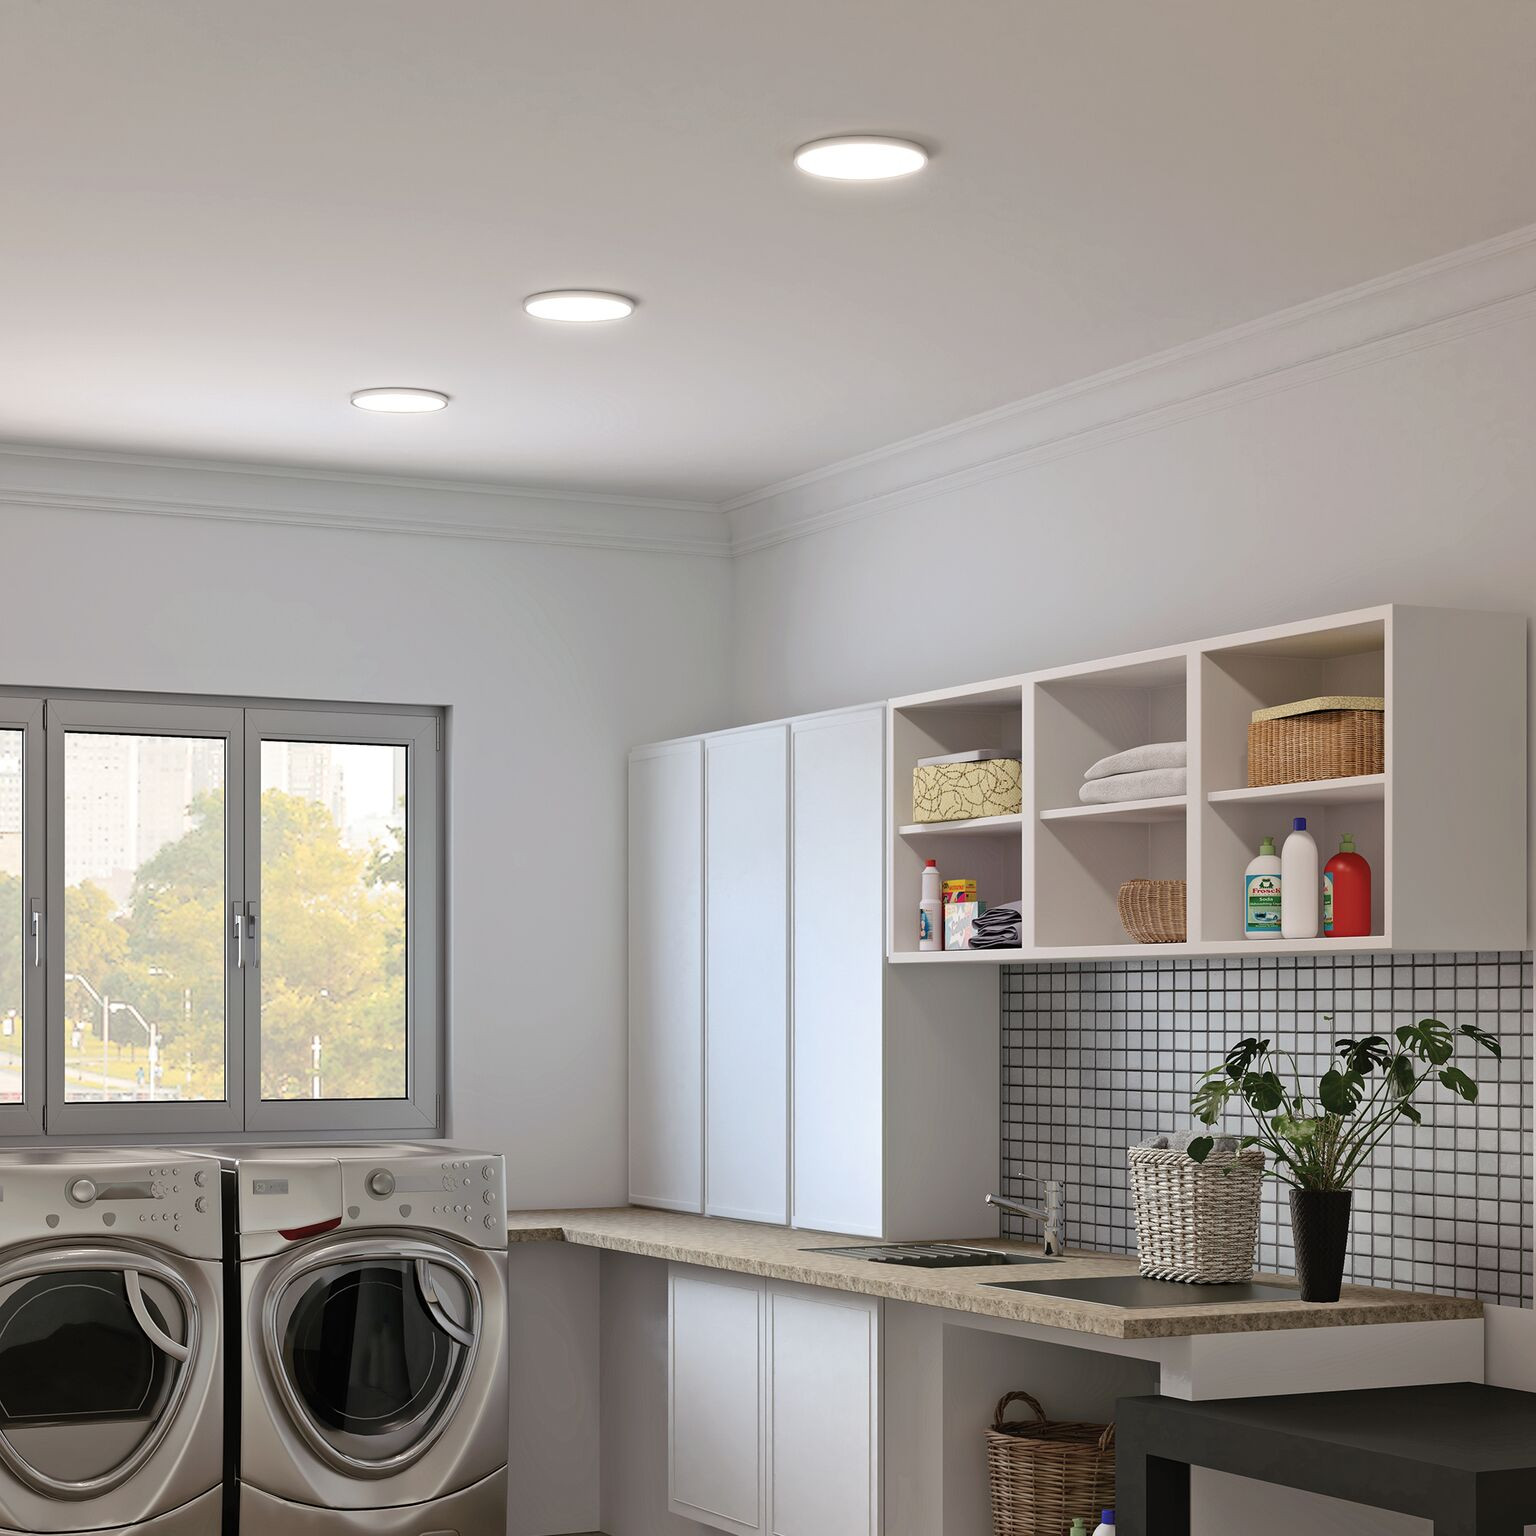 Best Home Decorating Ideas - 80+ Top Designer Decor Tricks: Laundry